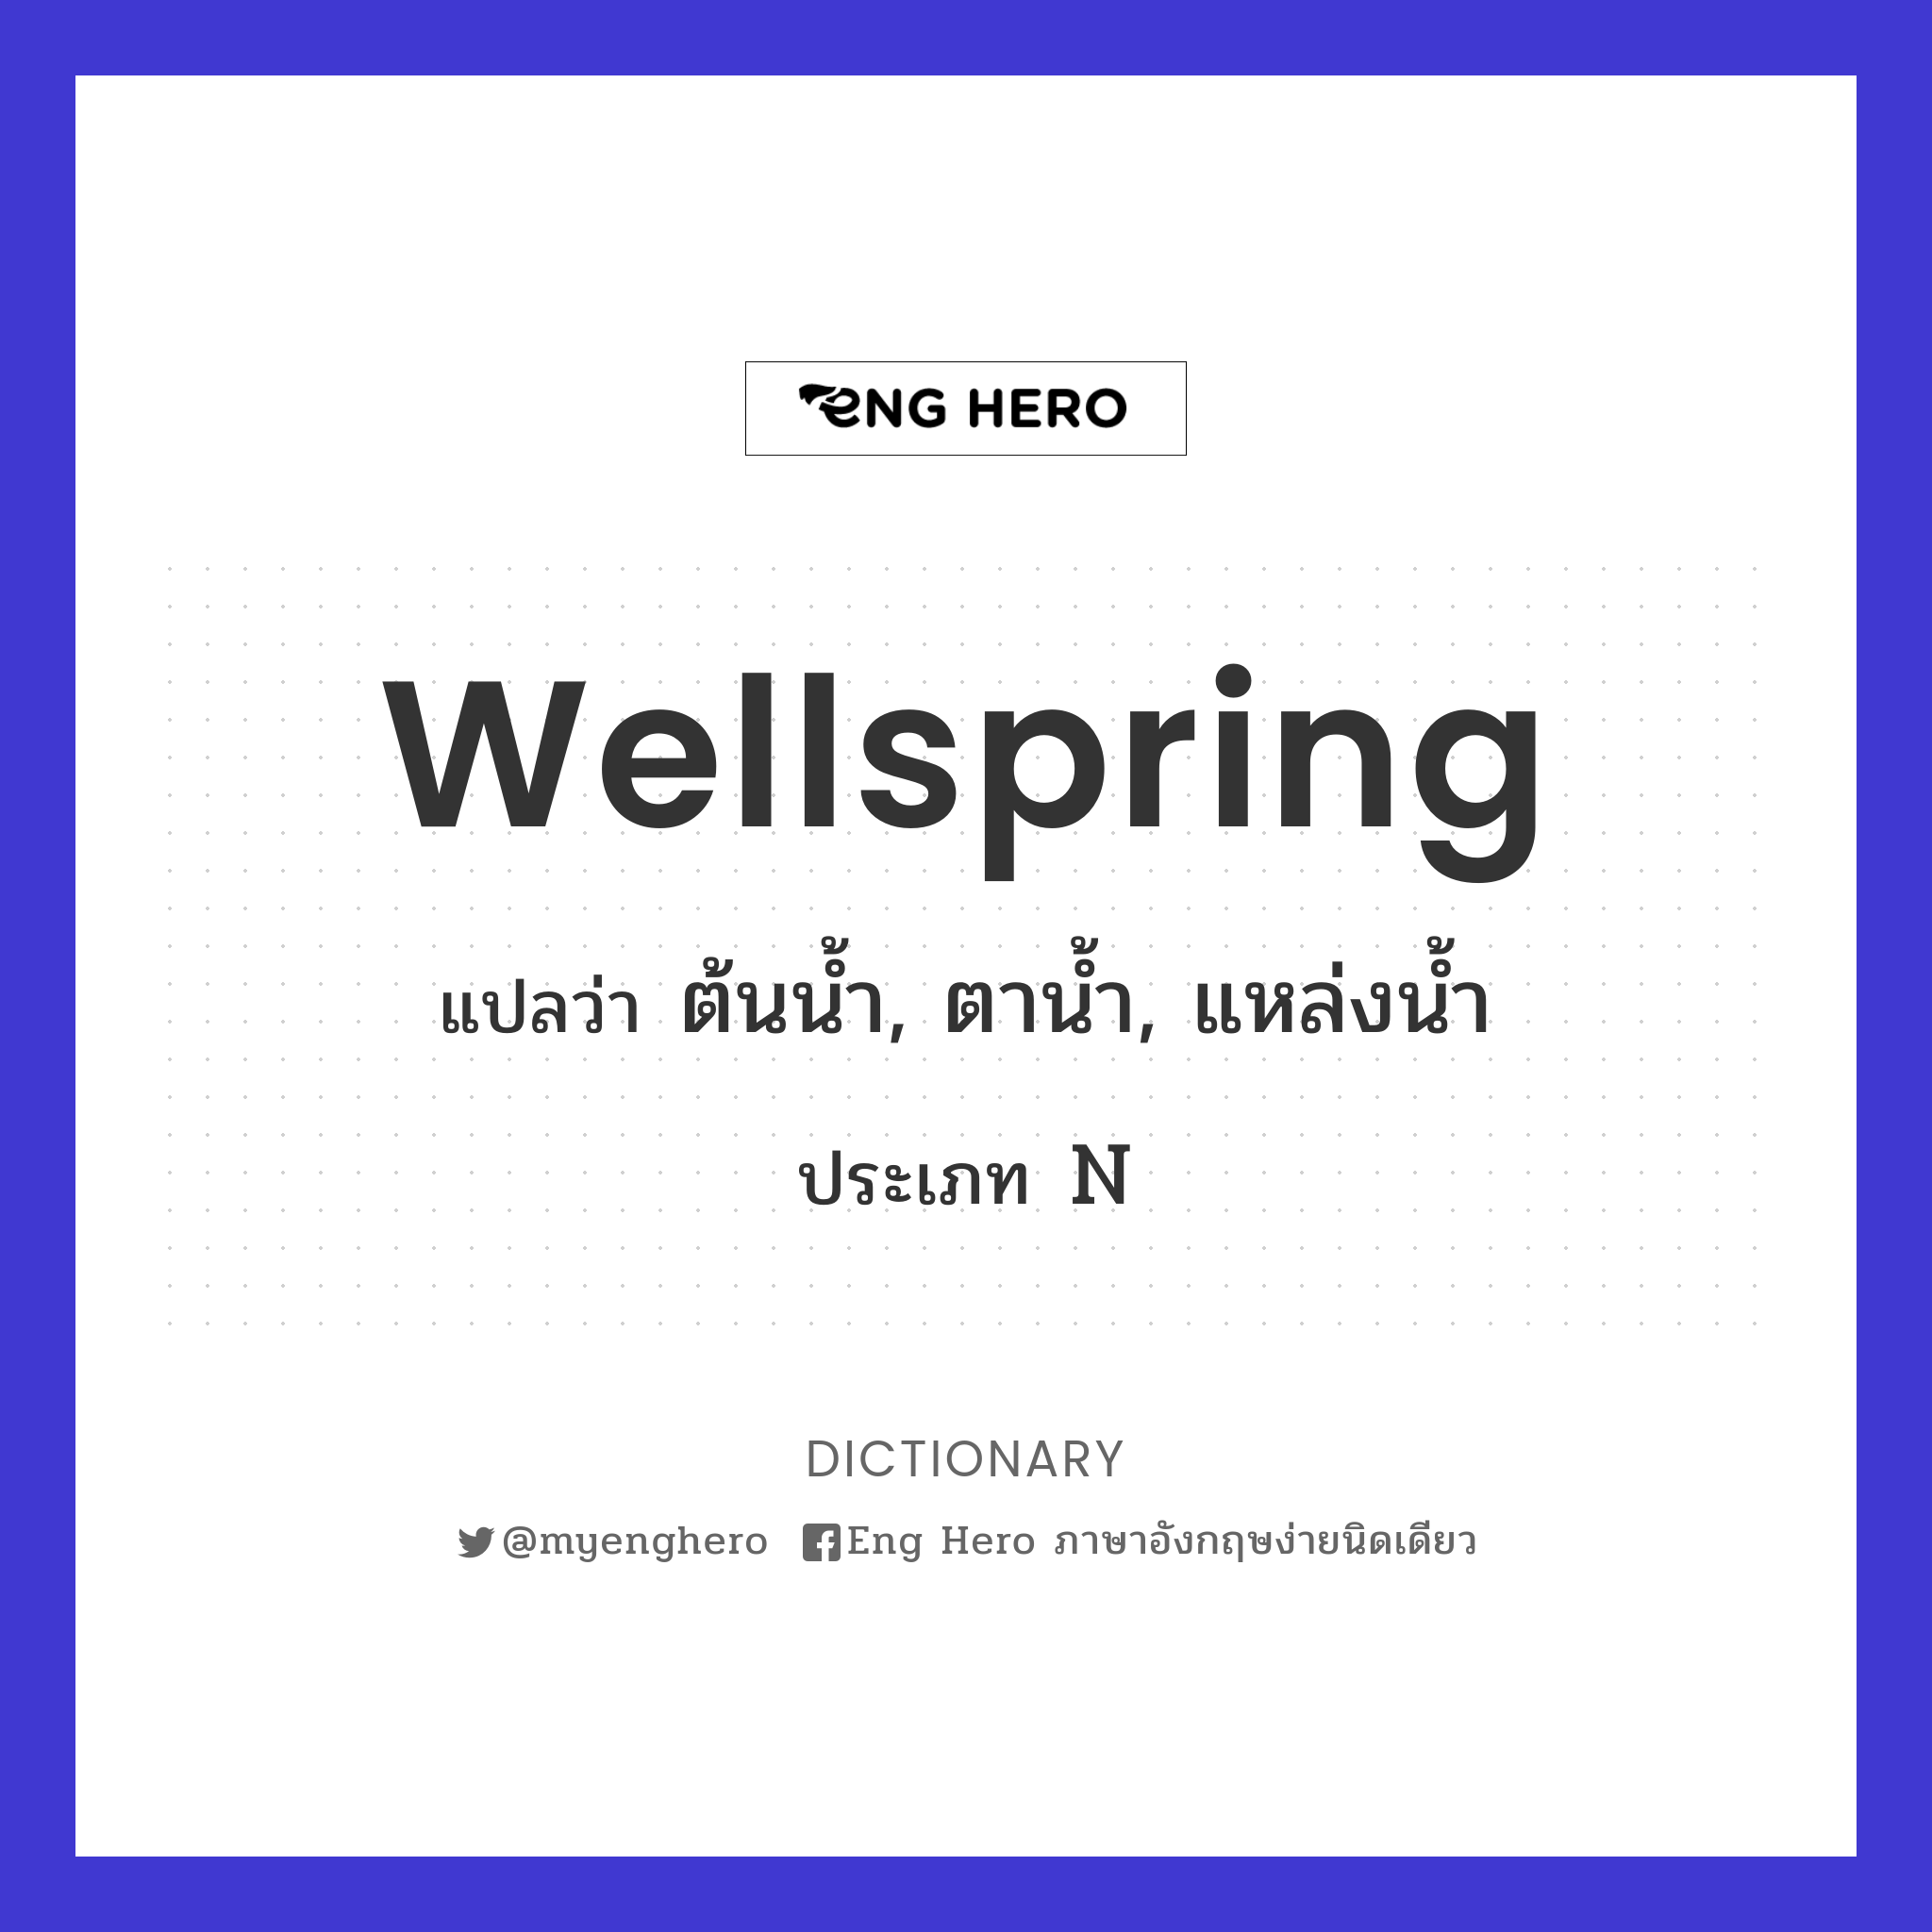 wellspring